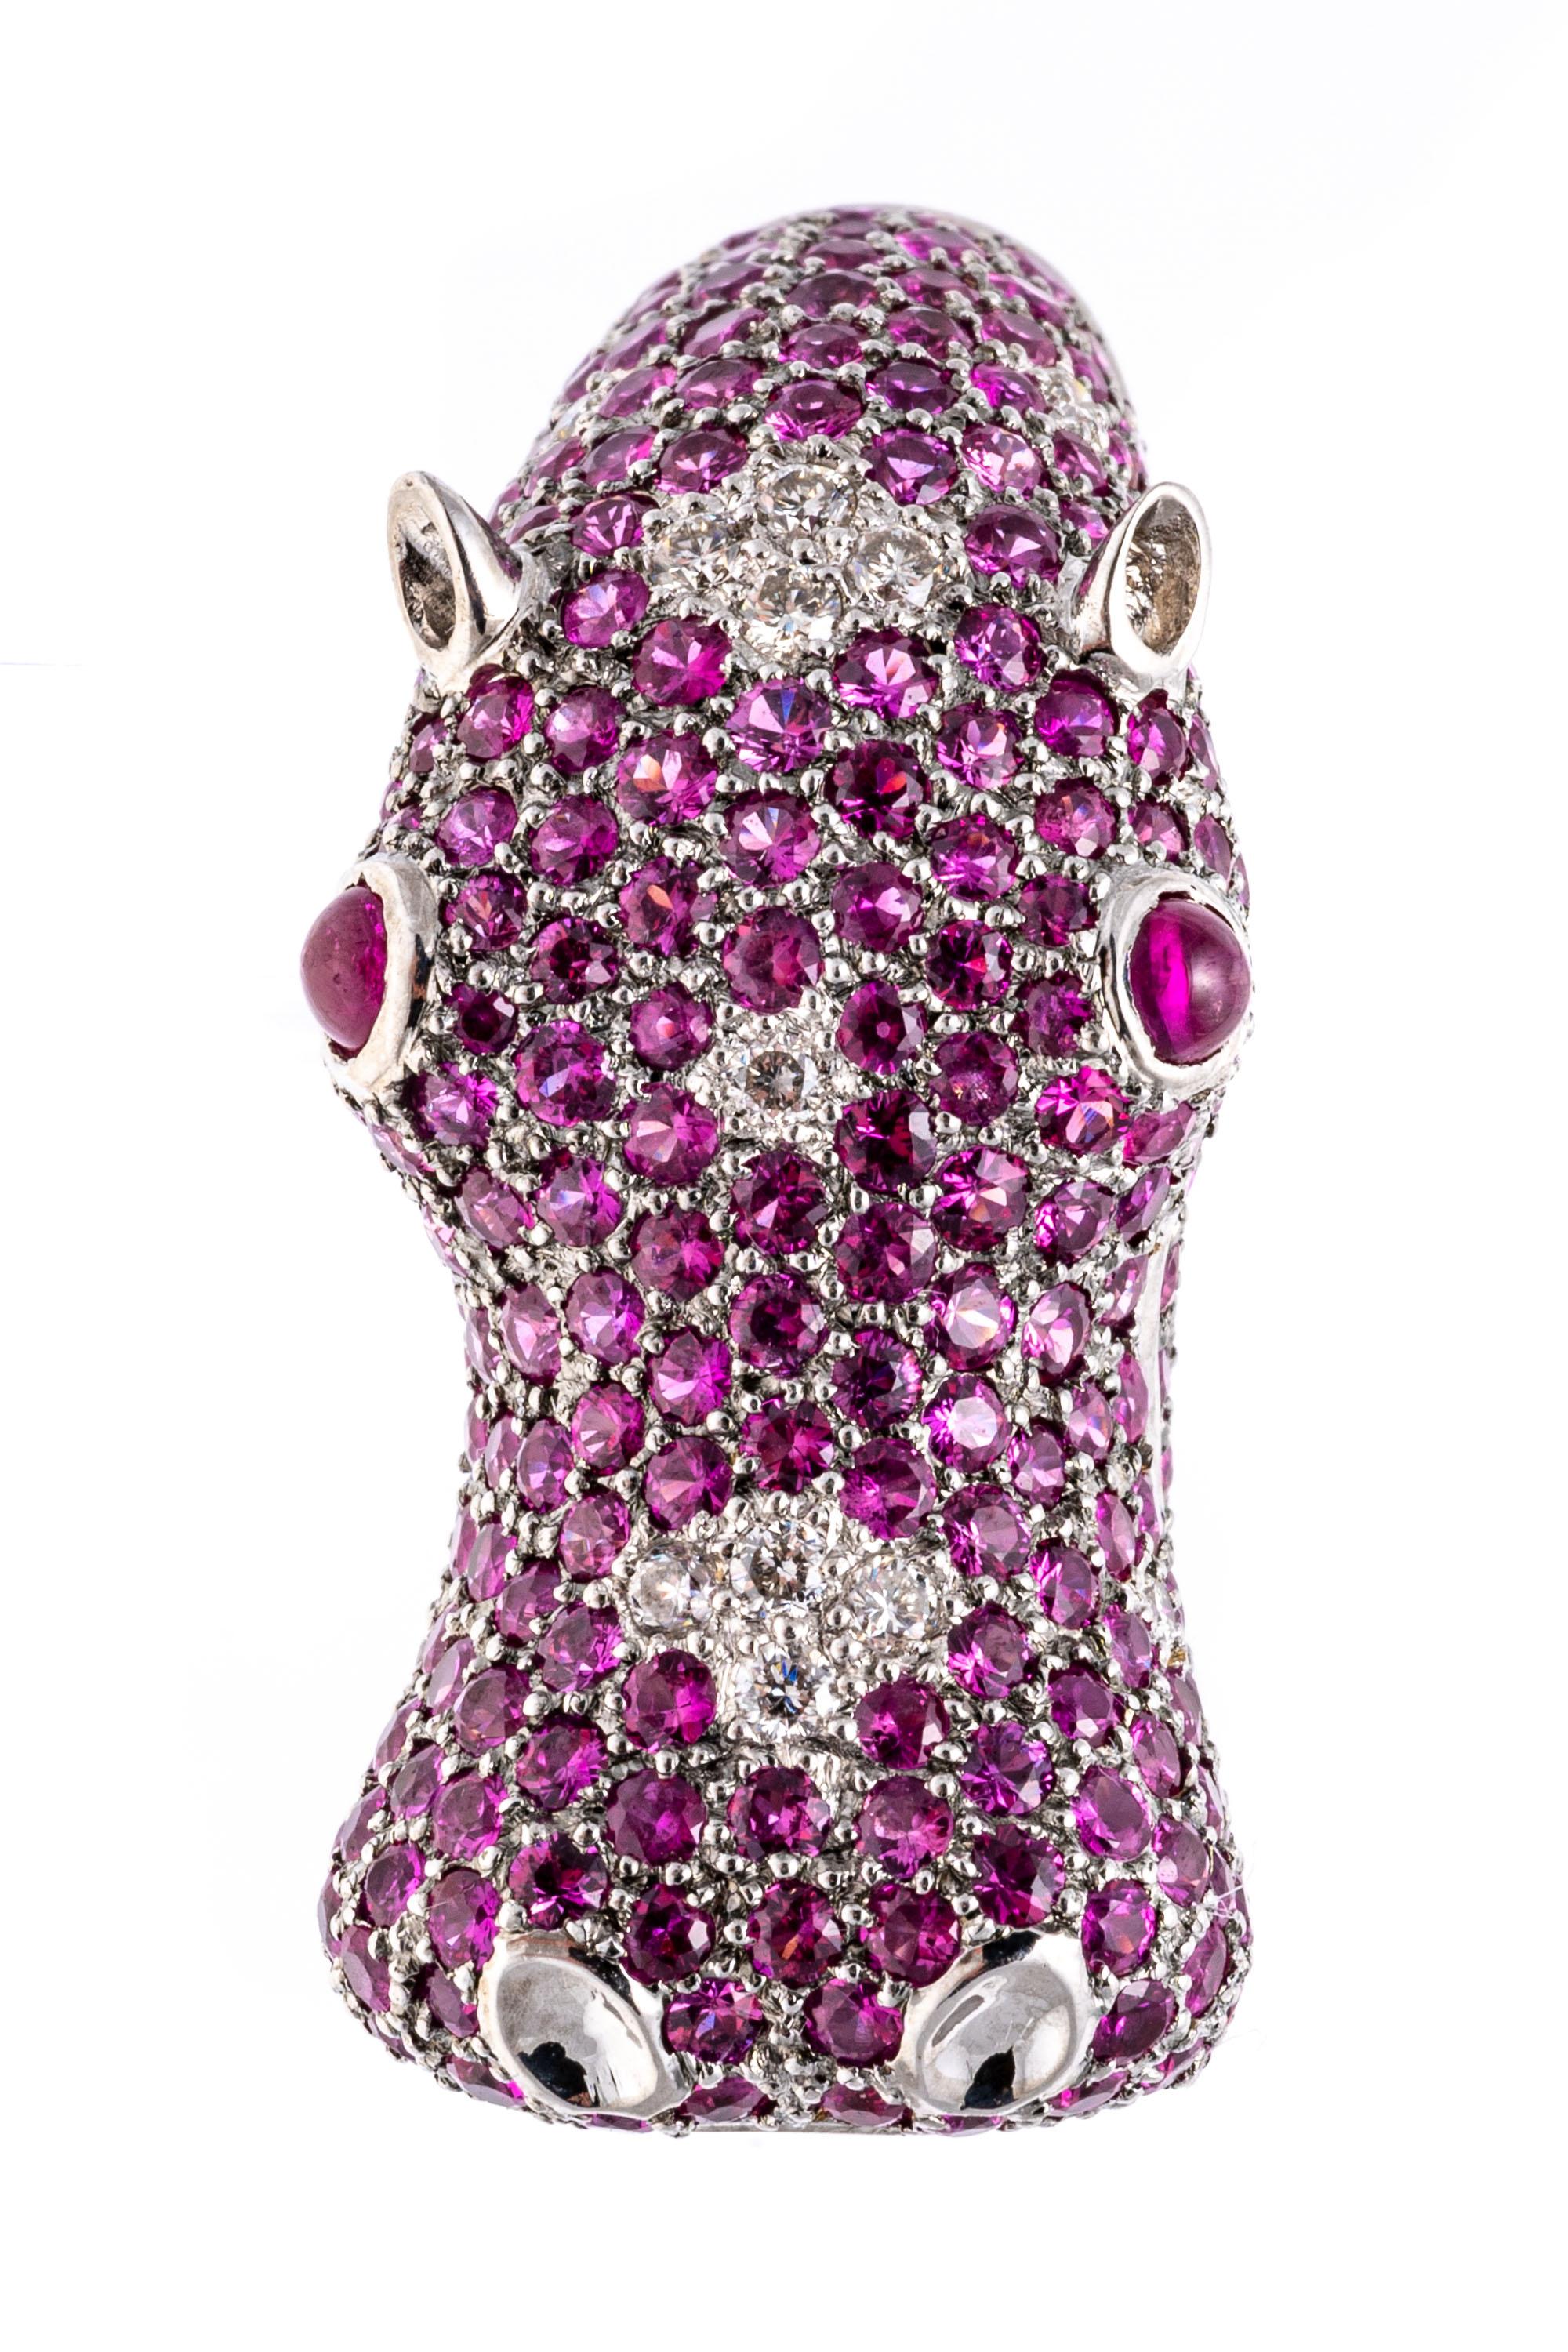 18k White Gold Pink Sapphire and Diamond Roaring Hippopotamus Ring For Sale 7